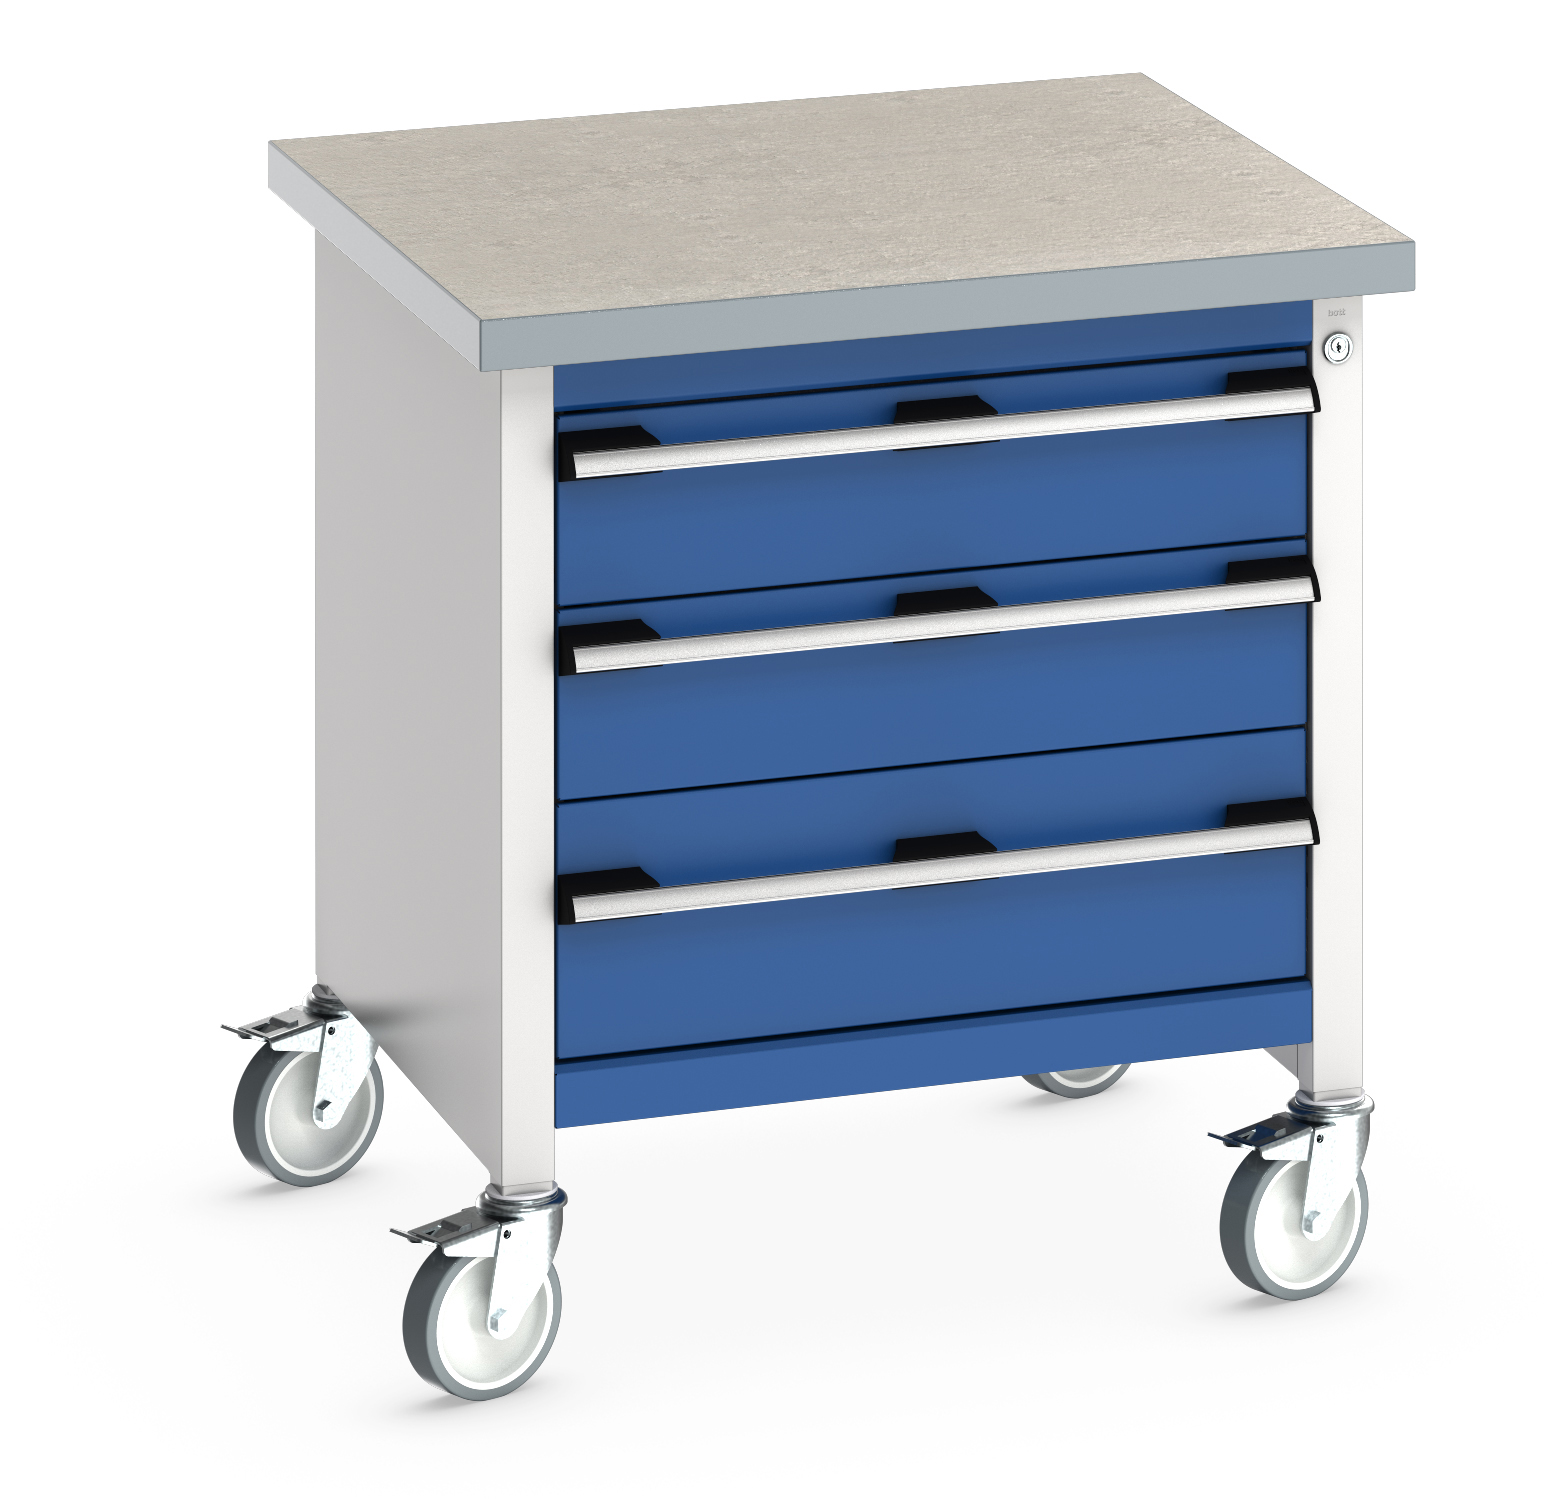 Bott Cubio Mobile Storage Bench With 3 Drawer Cabinet - 41002093.11V